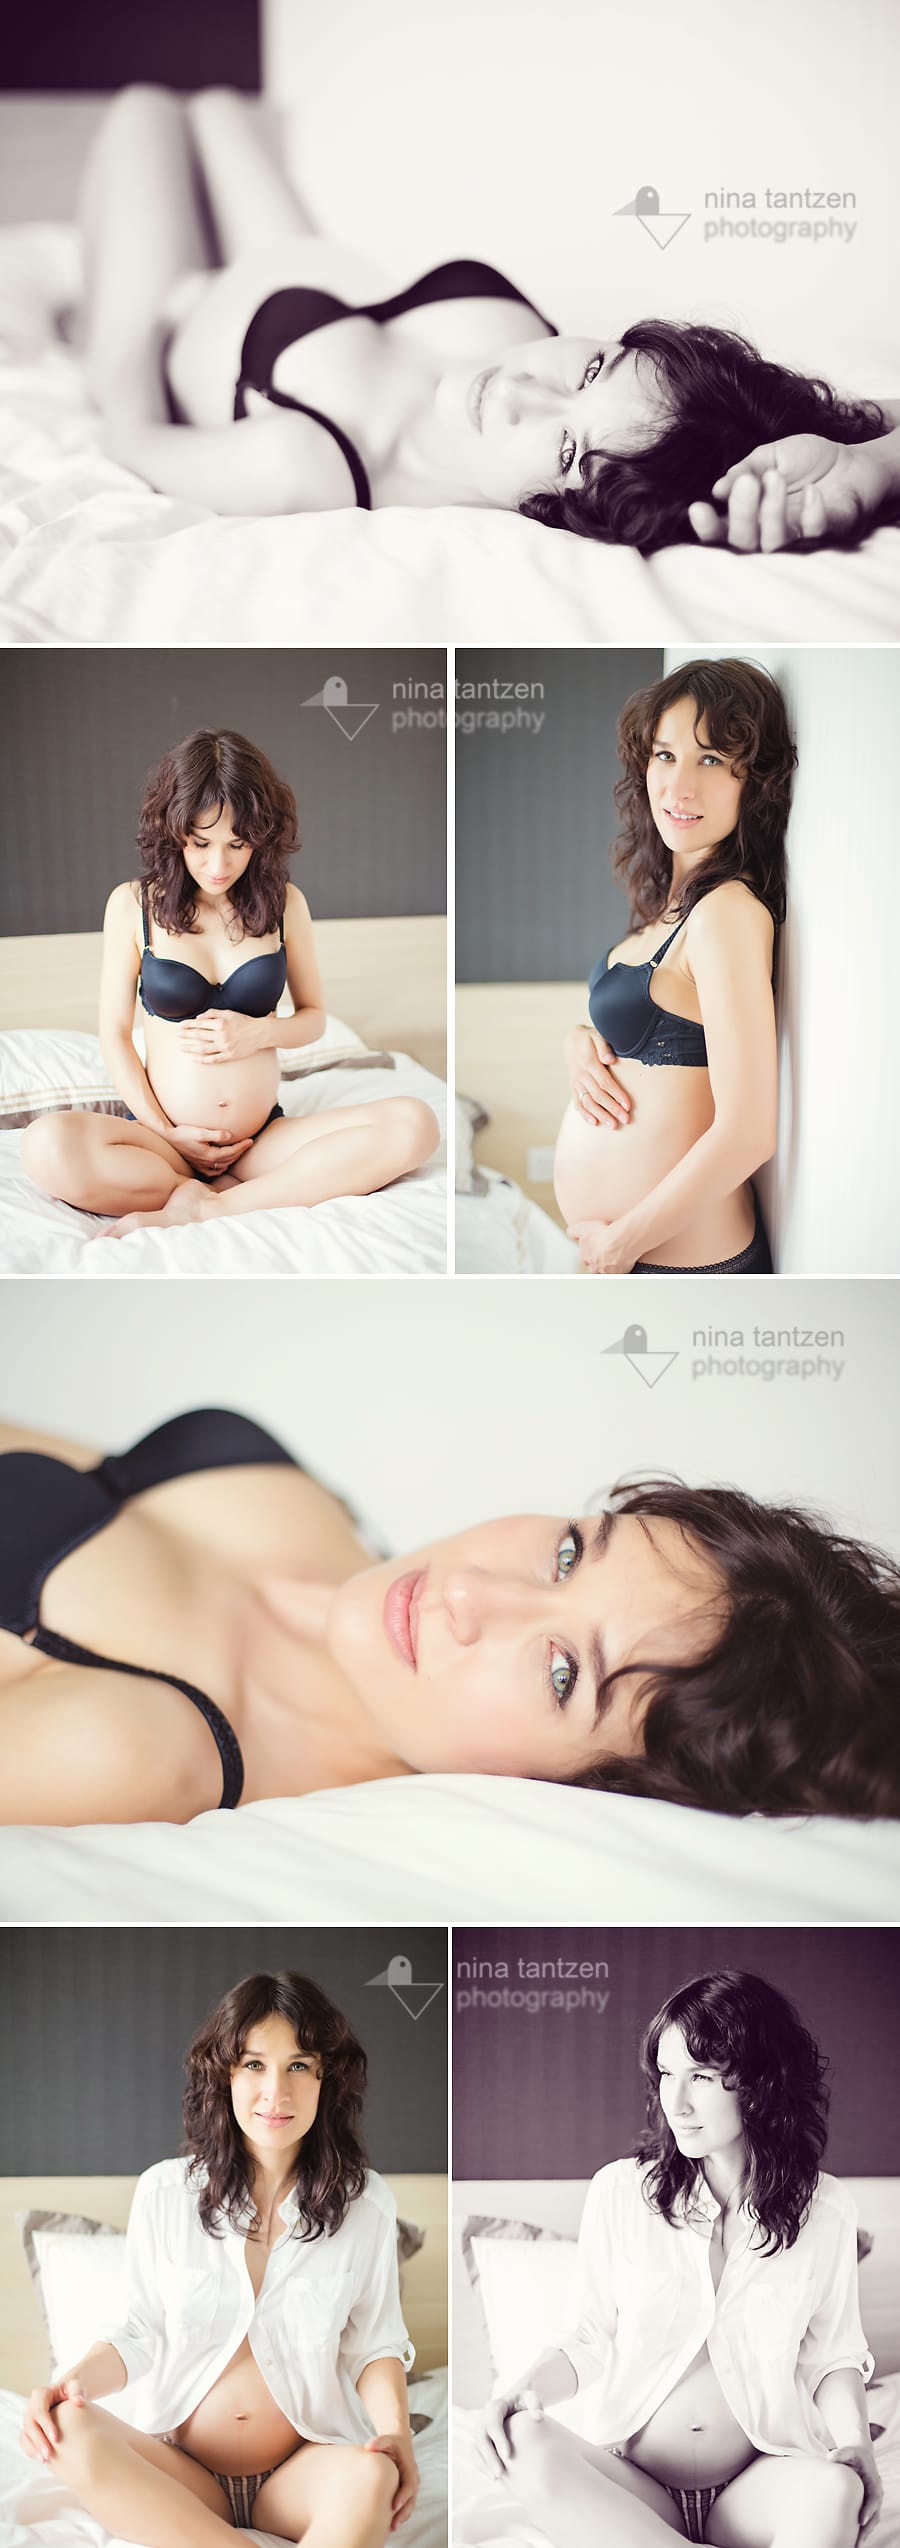 pregnancy portraits in singapore by nina tantzen